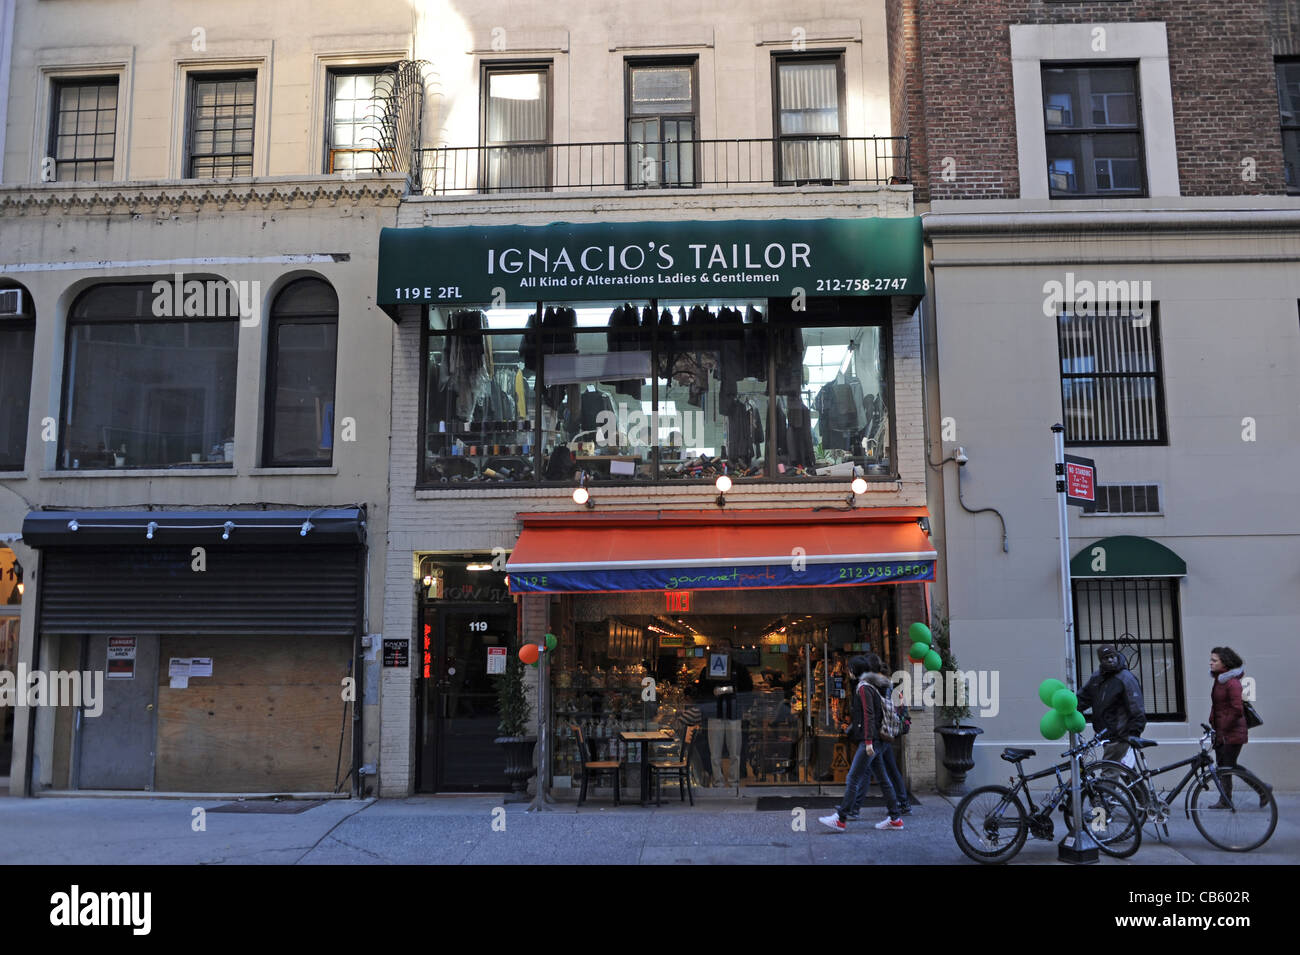 Ignacio's Tailor shop in Midtown Manhattan New York NYC USA Stock Photo